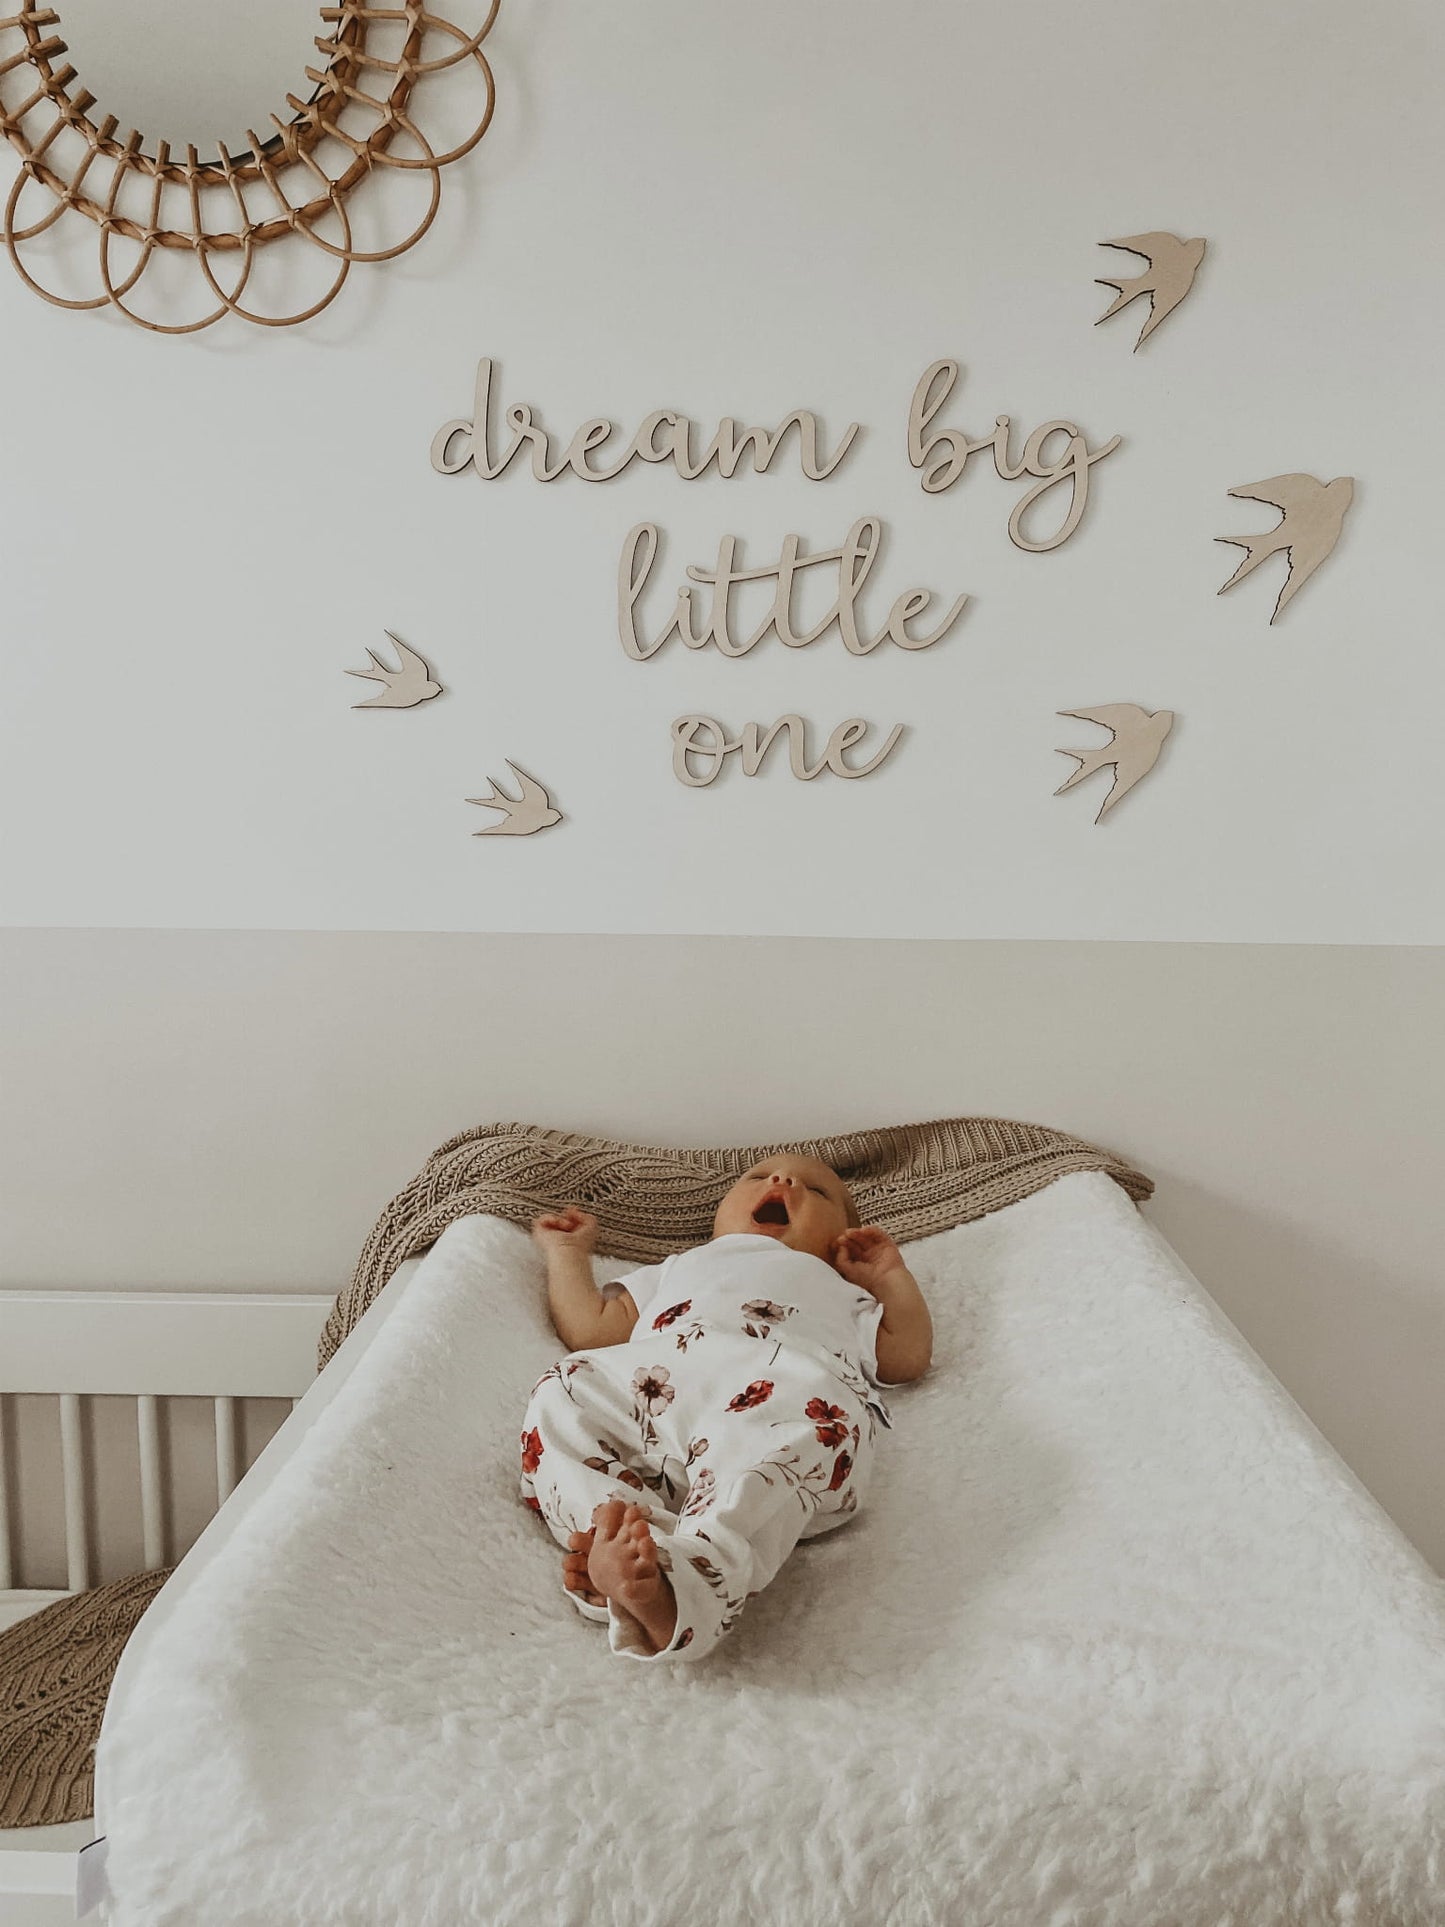 Napis „Dream big little one”